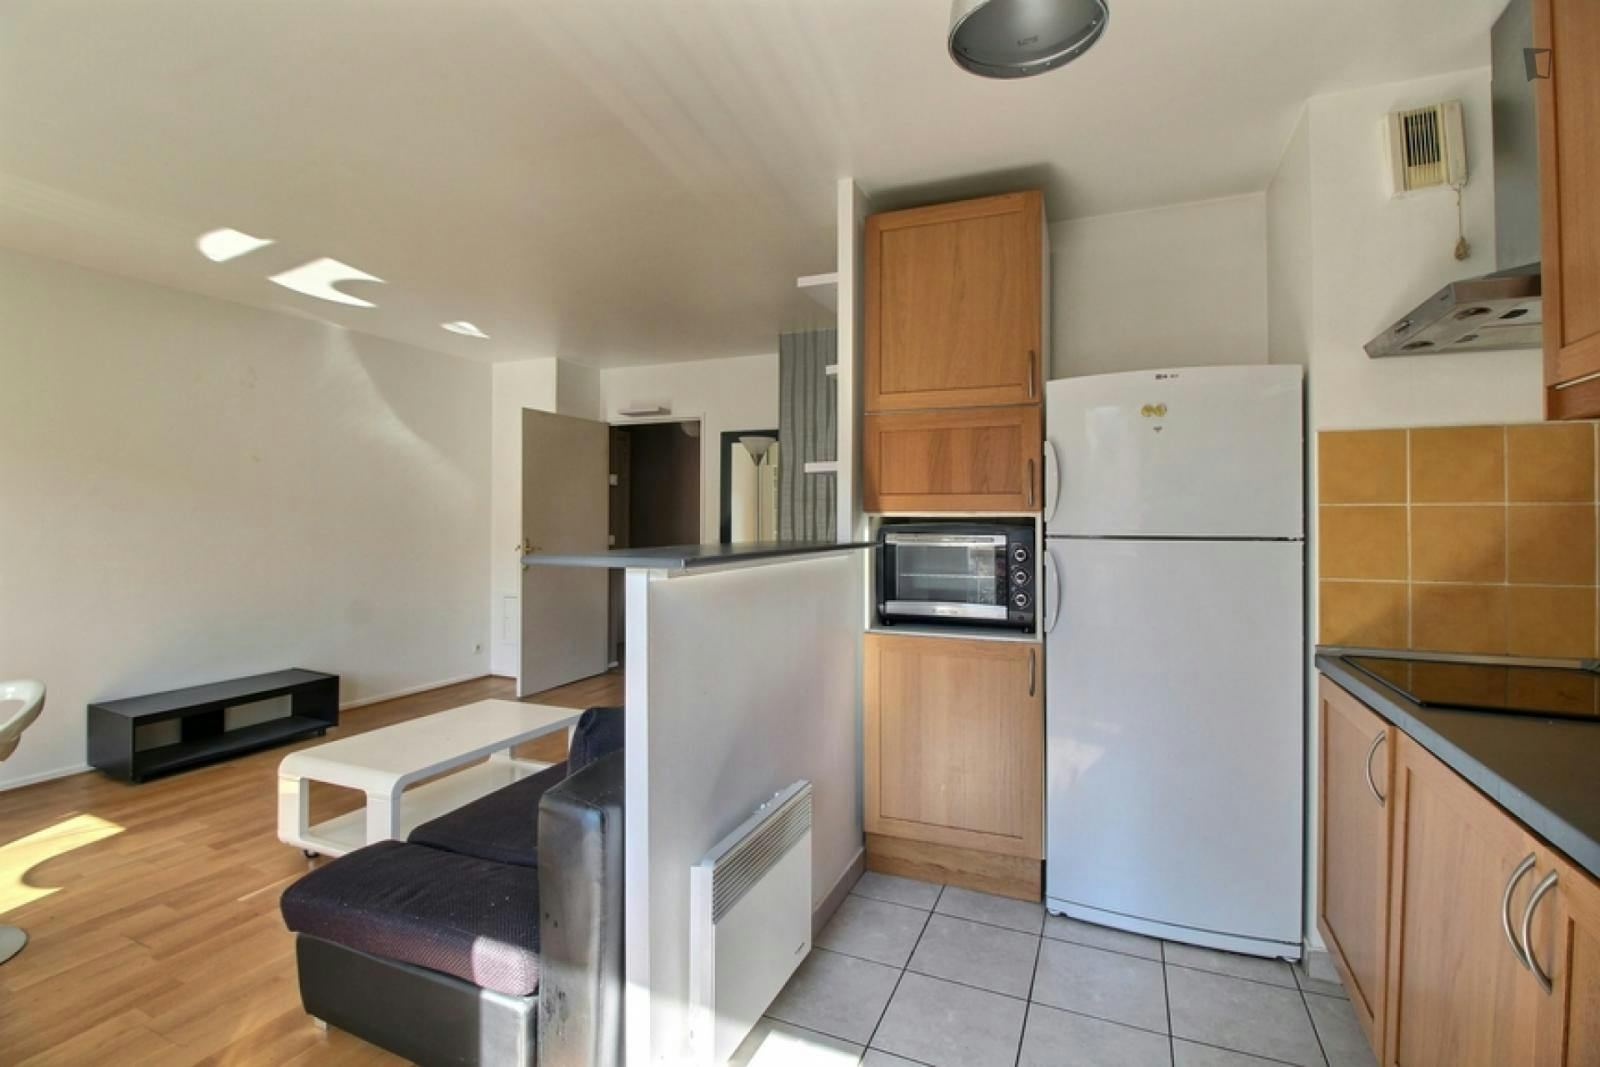 Appealing 2-bedroom apartment in Petite Prusse